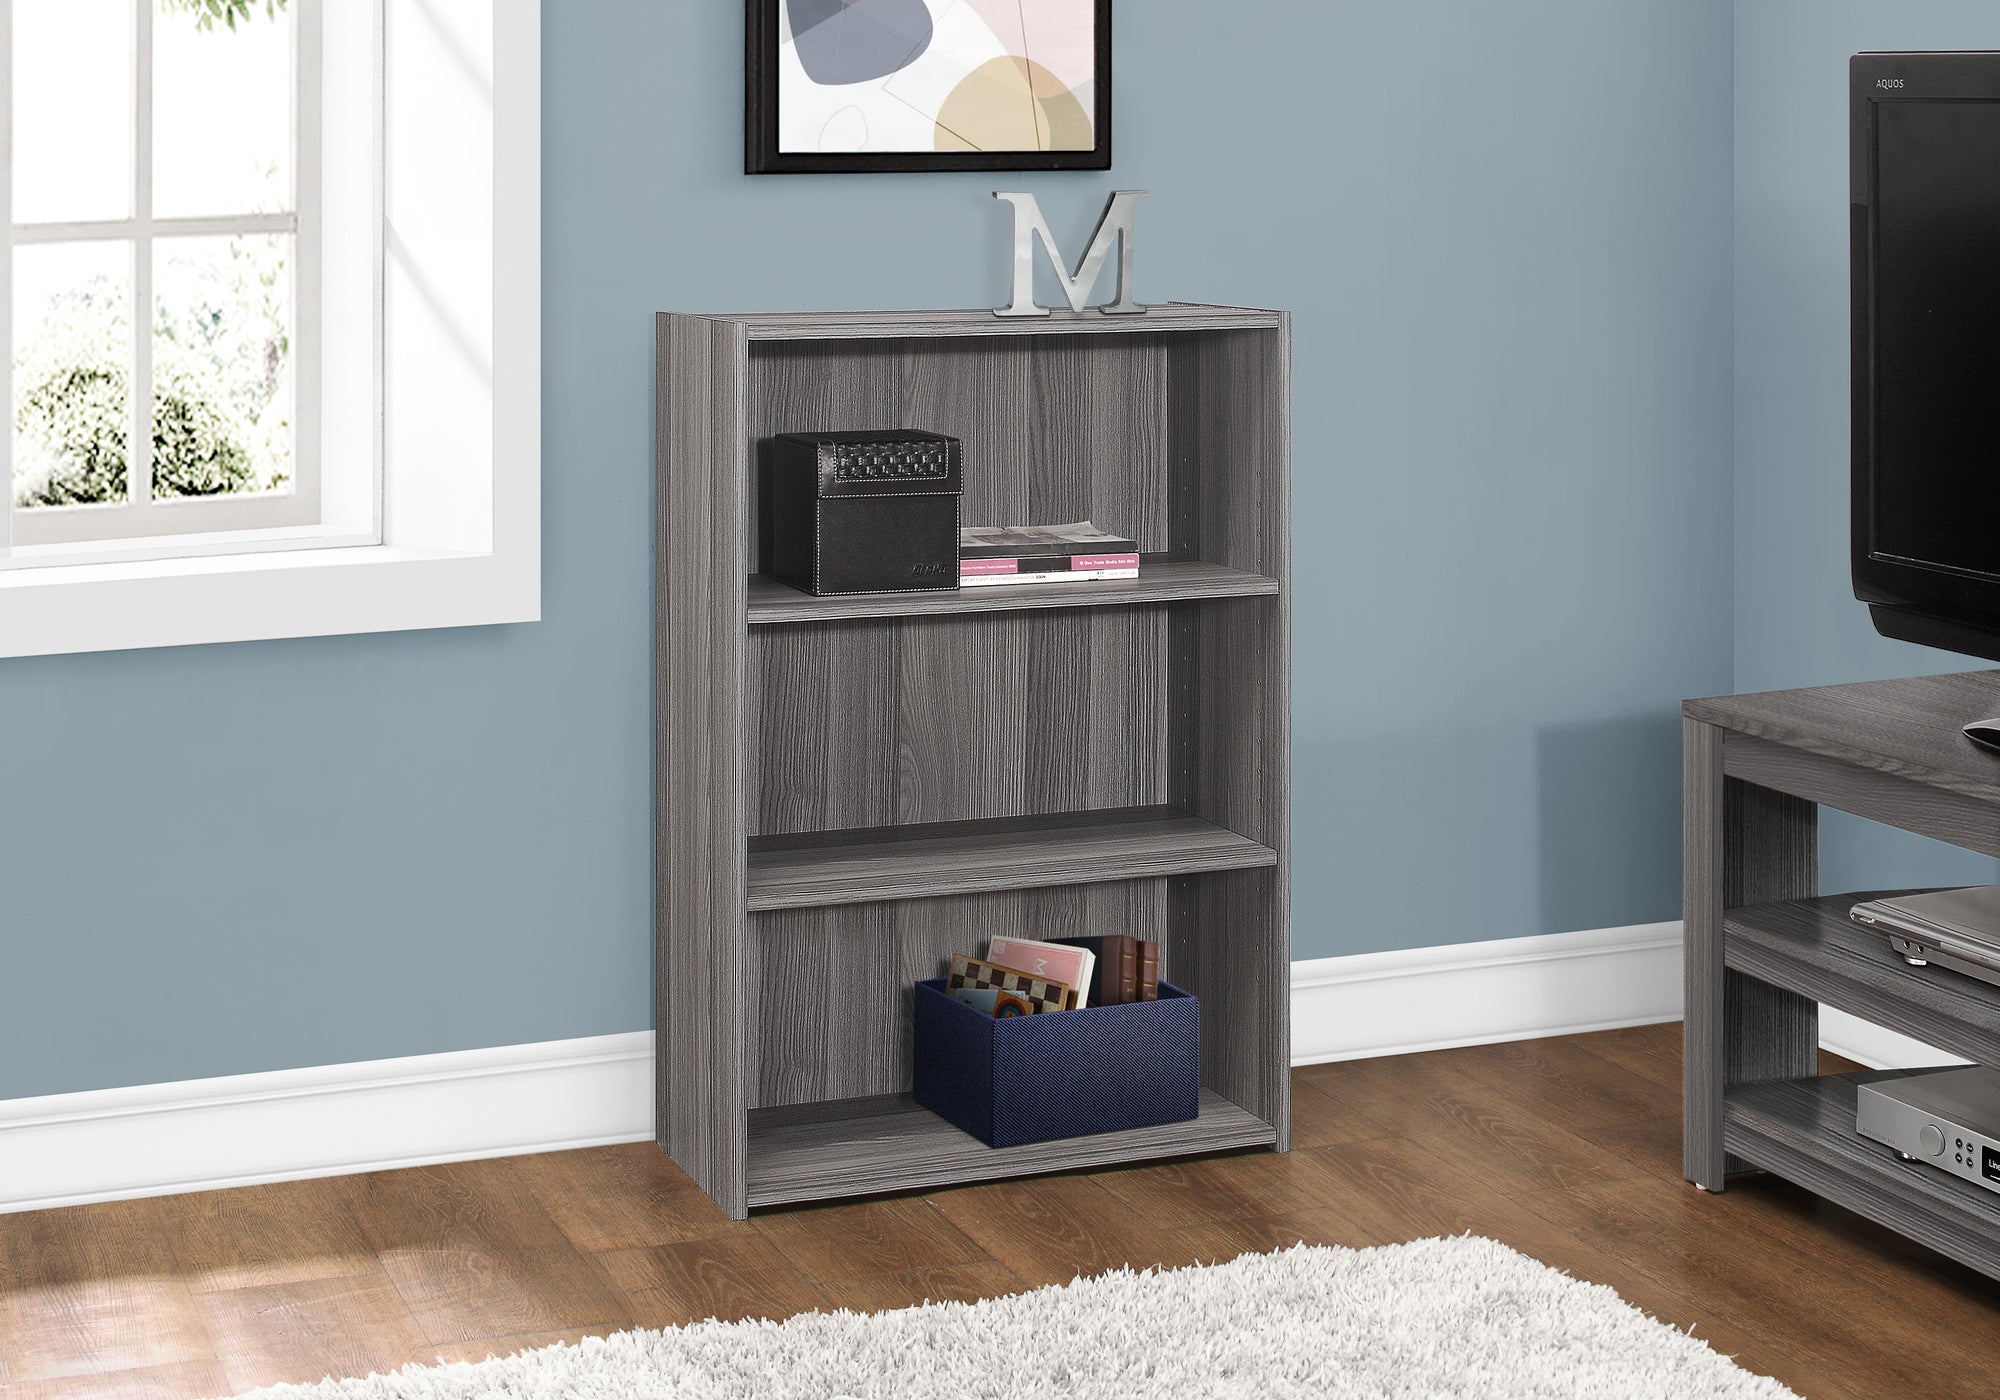 MN-357478    Bookshelf, Bookcase, 4 Tier, 36"H, Office, Bedroom, Laminate, Grey, Contemporary, Modern, Transitional